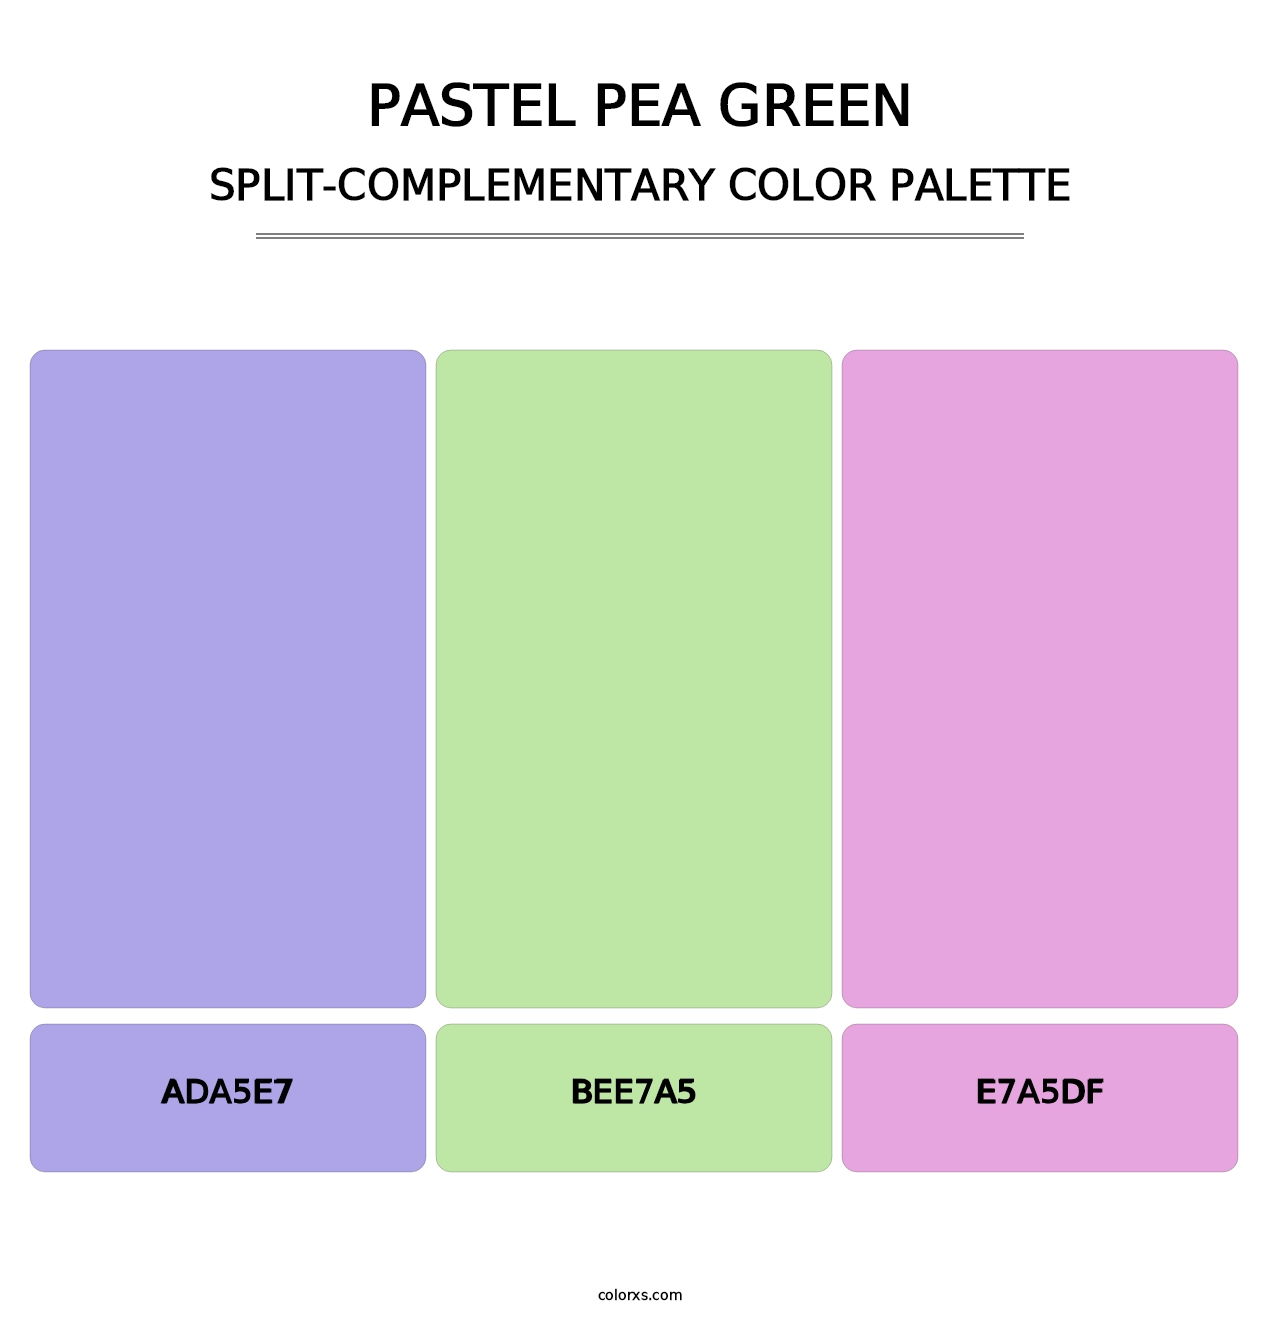 Pastel Pea Green - Split-Complementary Color Palette